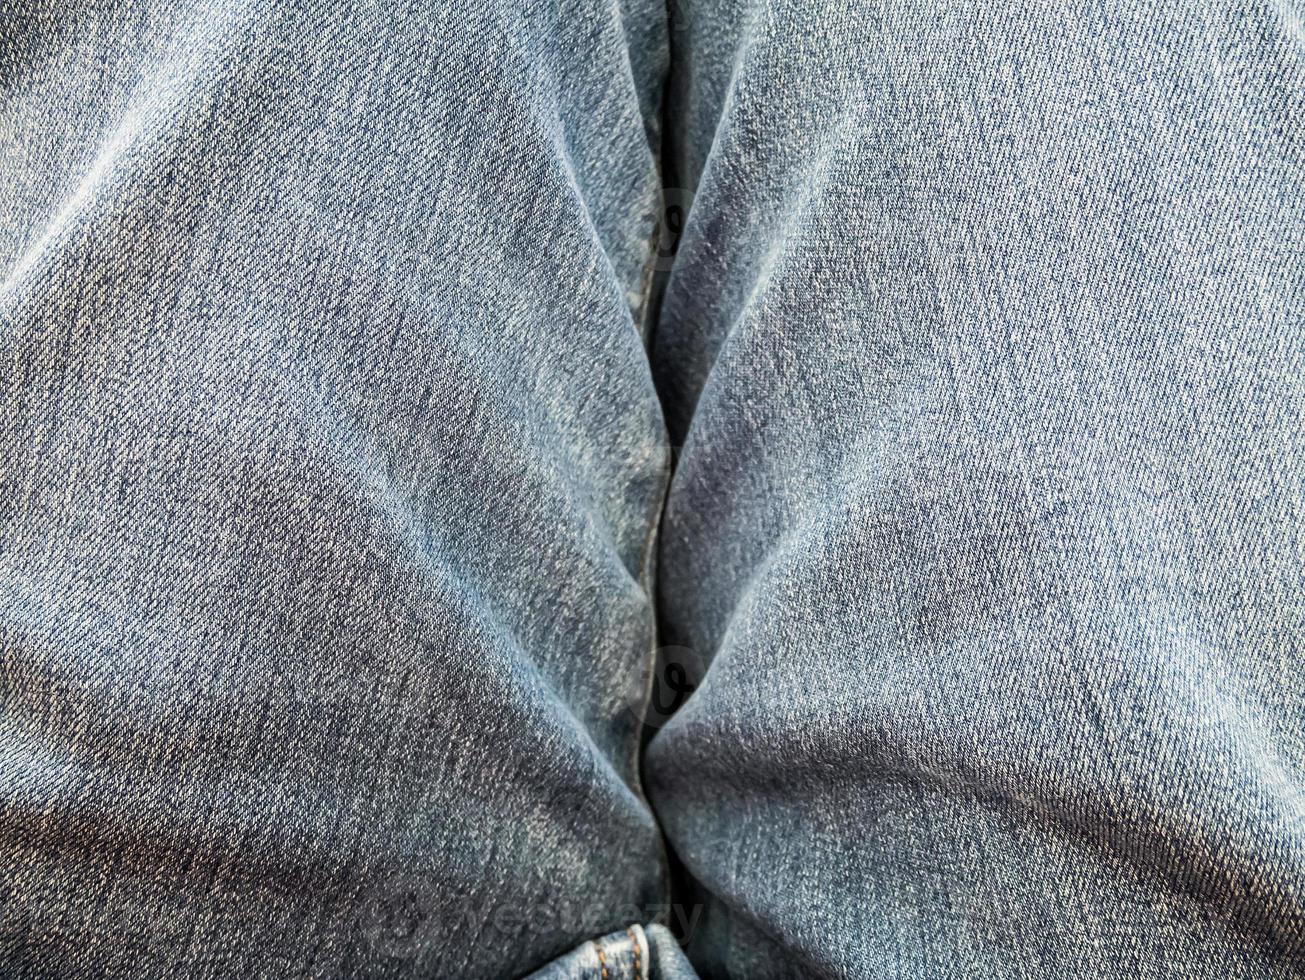 jeans texture close up photo